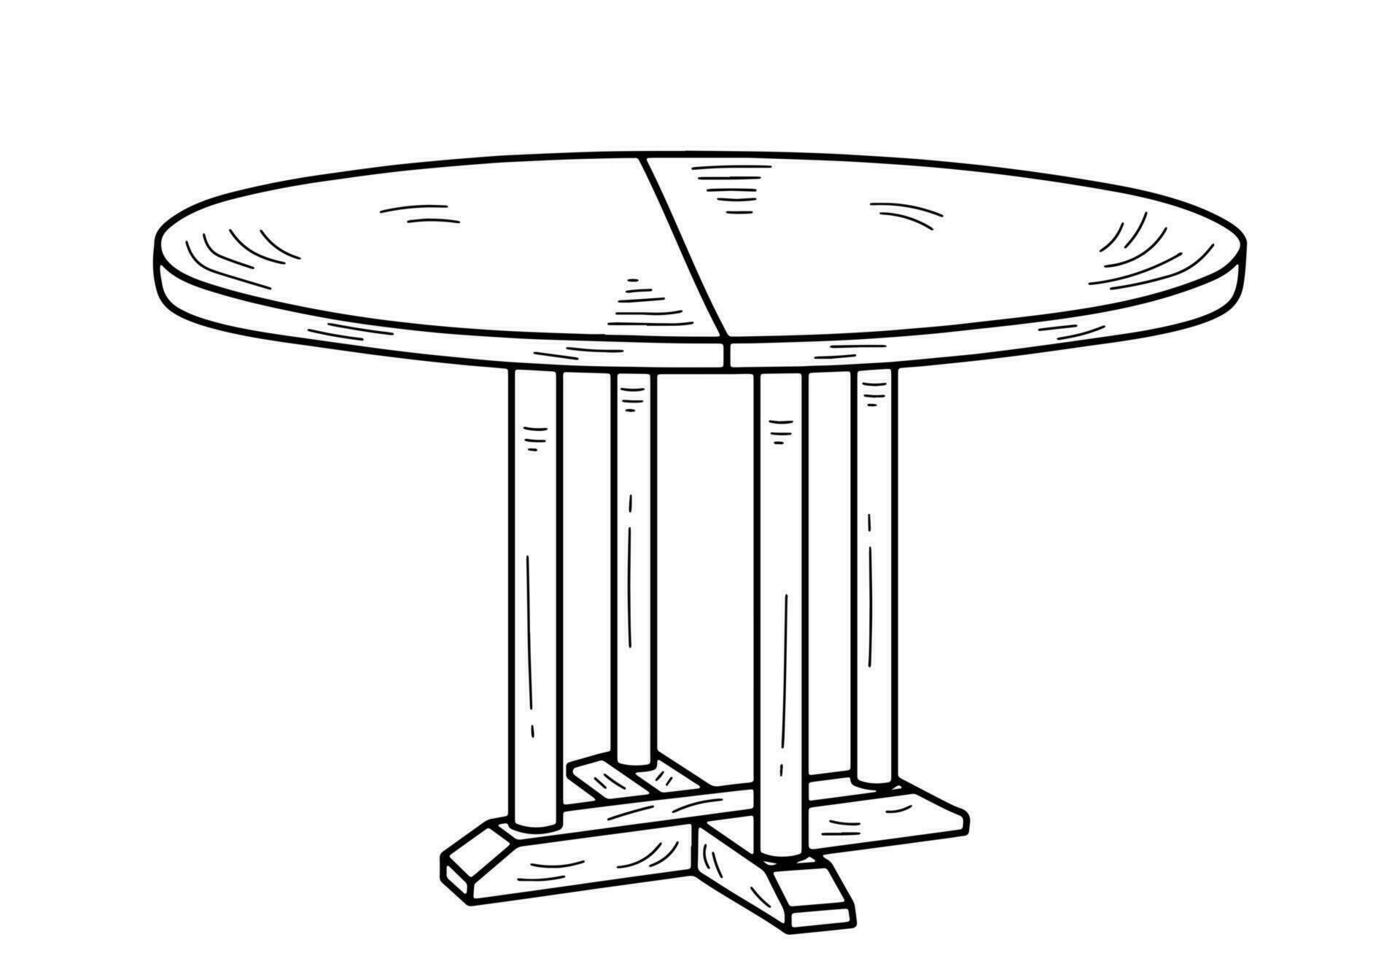 skiss av en fyra posta utdragbar tabell. skrivbord, diet tabell, skrivbord, kök tabell. bit av möbel vektor